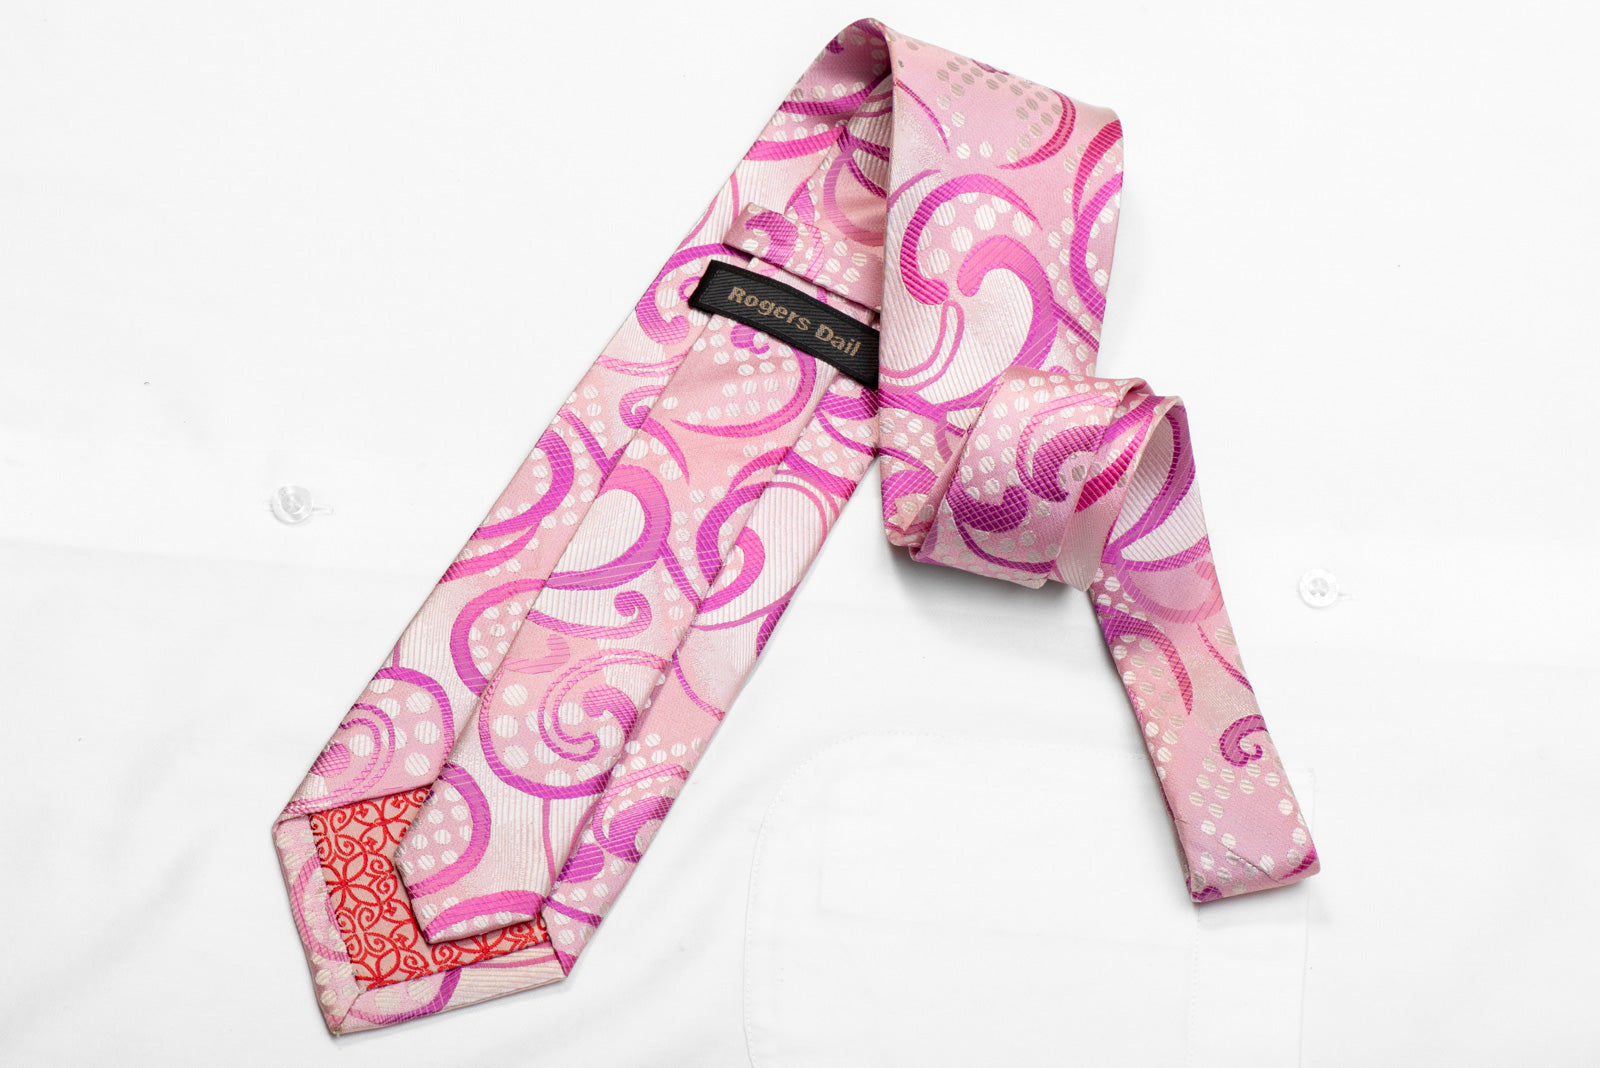 Blush Pink Satin Necktie with Geometric Rose Gold Rhinestones Pattern